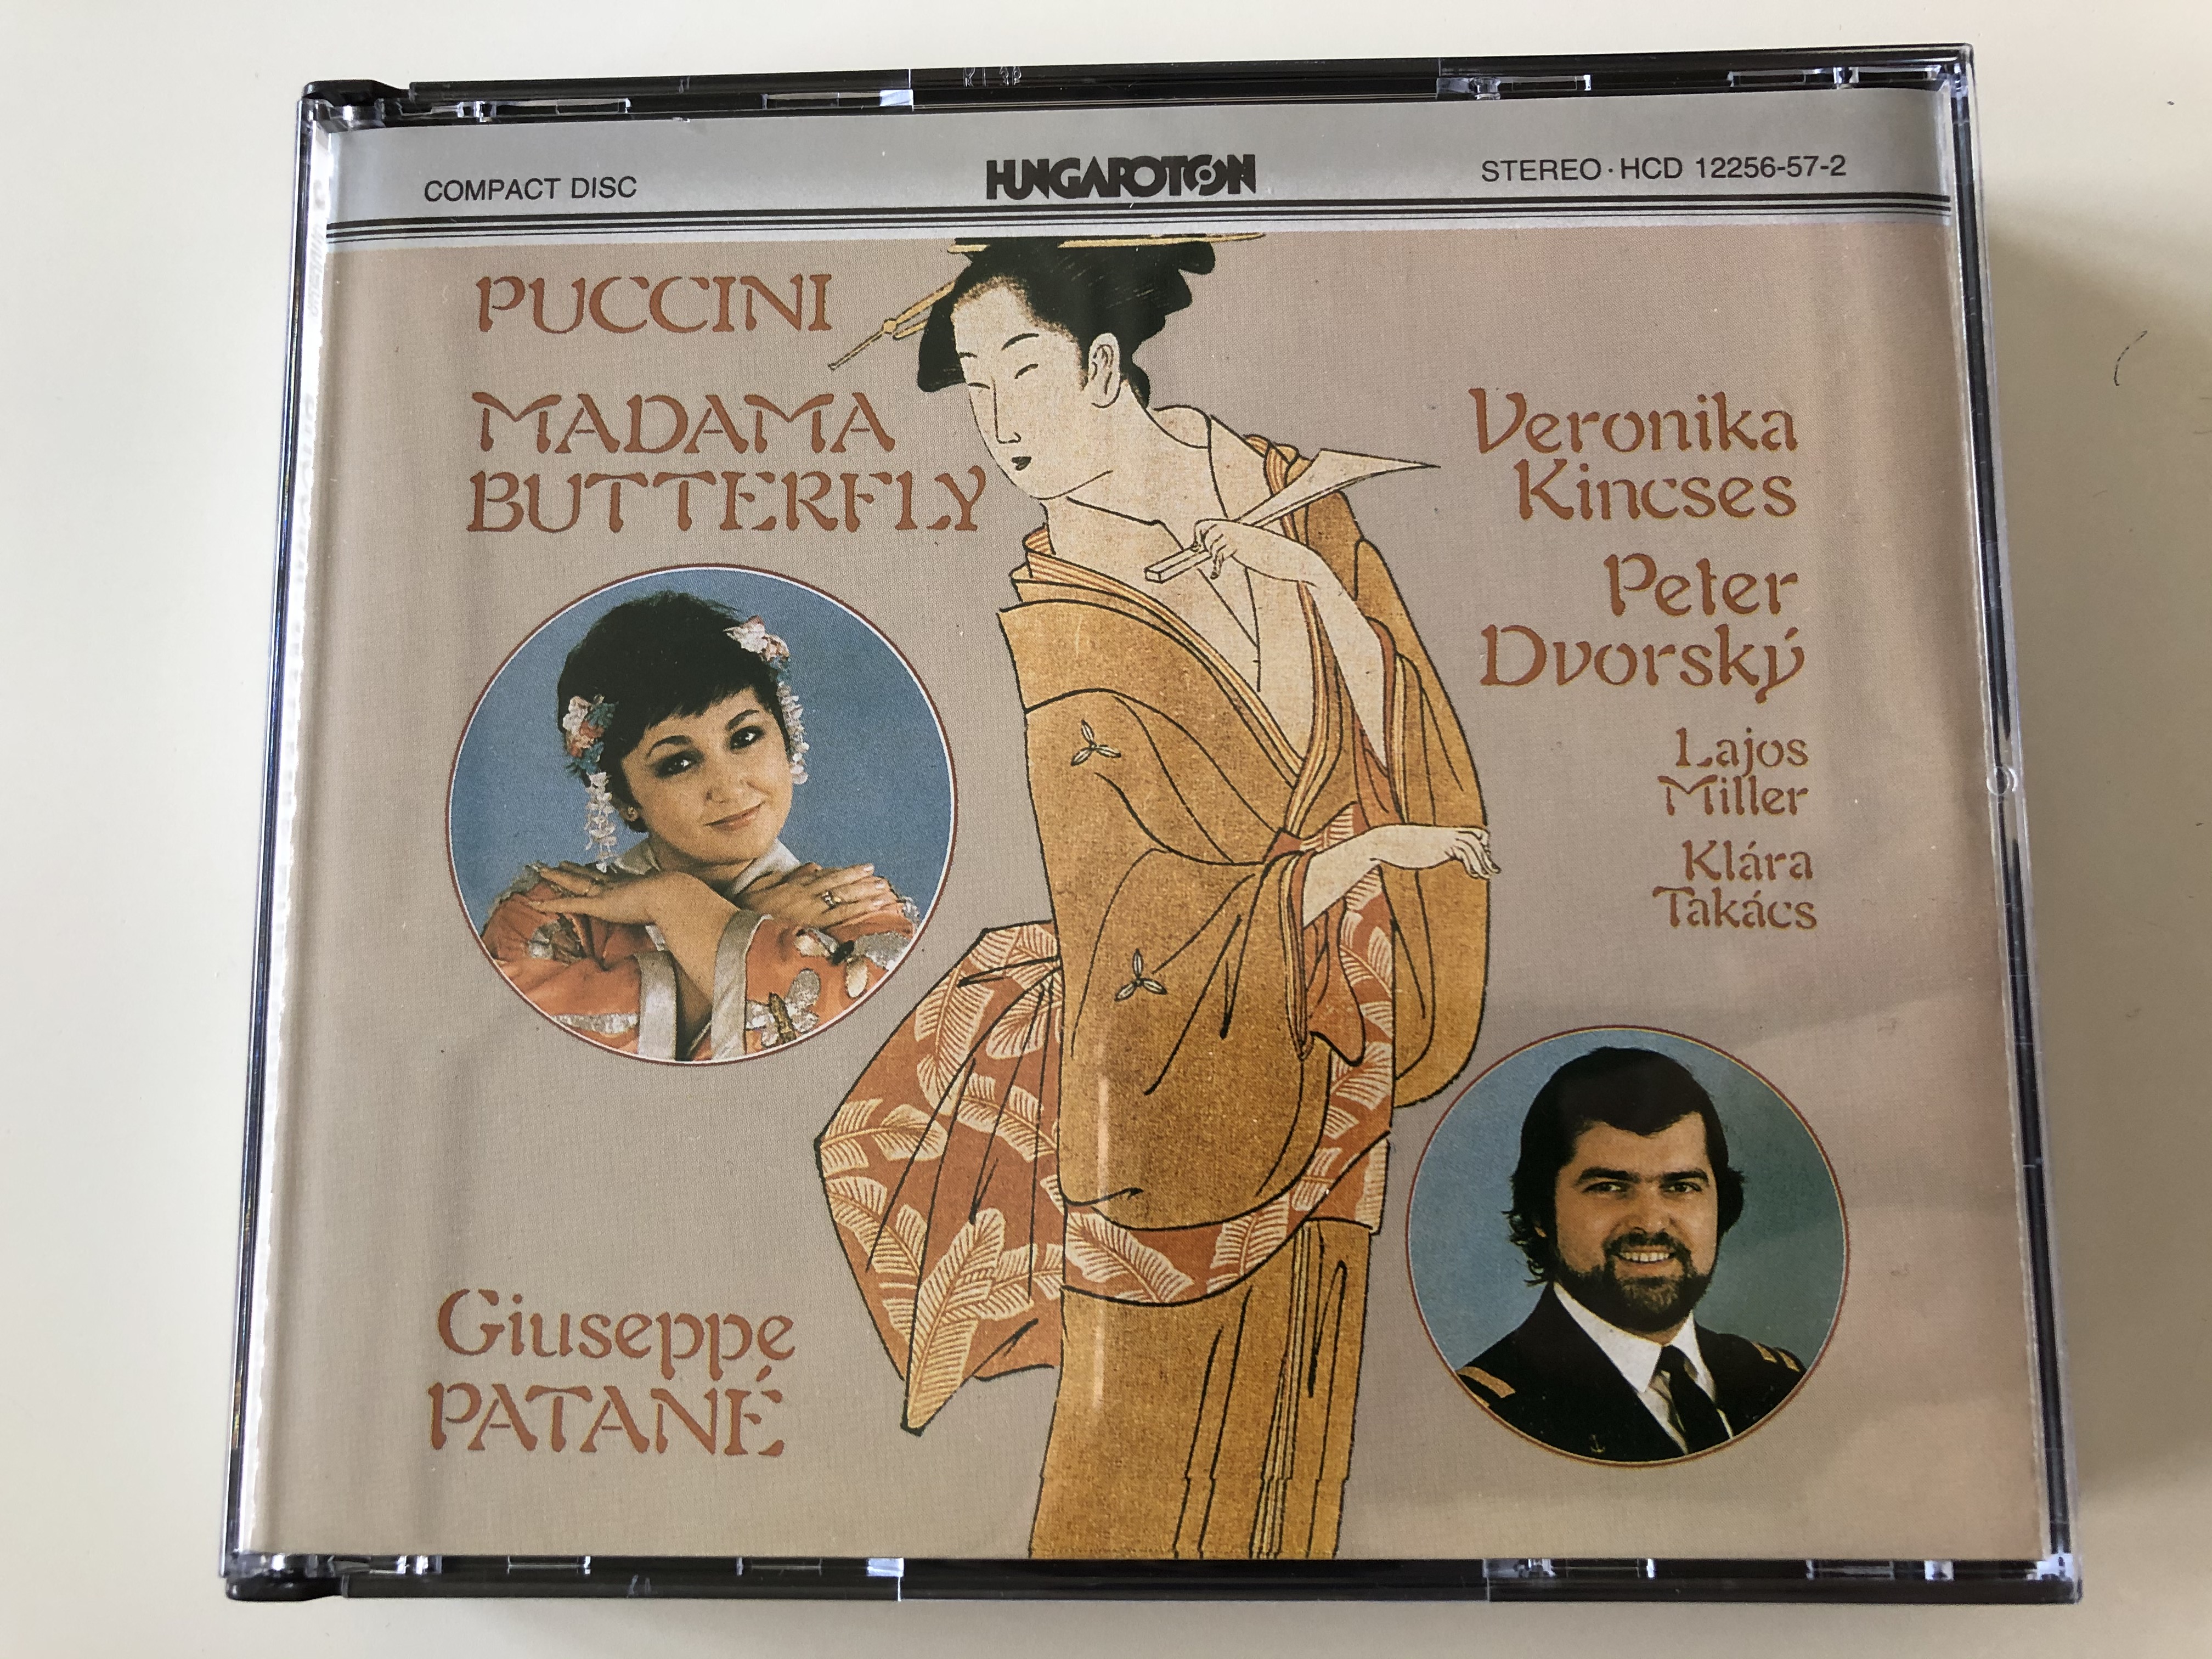 puccini-madama-butterfly-giuseppe-patan-veronika-kincses-peter-dvorsk-lajos-miller-kl-ra-tak-cs-hungaroton-2x-audio-cd-1981-stereo-hcd-12256-57-2-1-.jpg